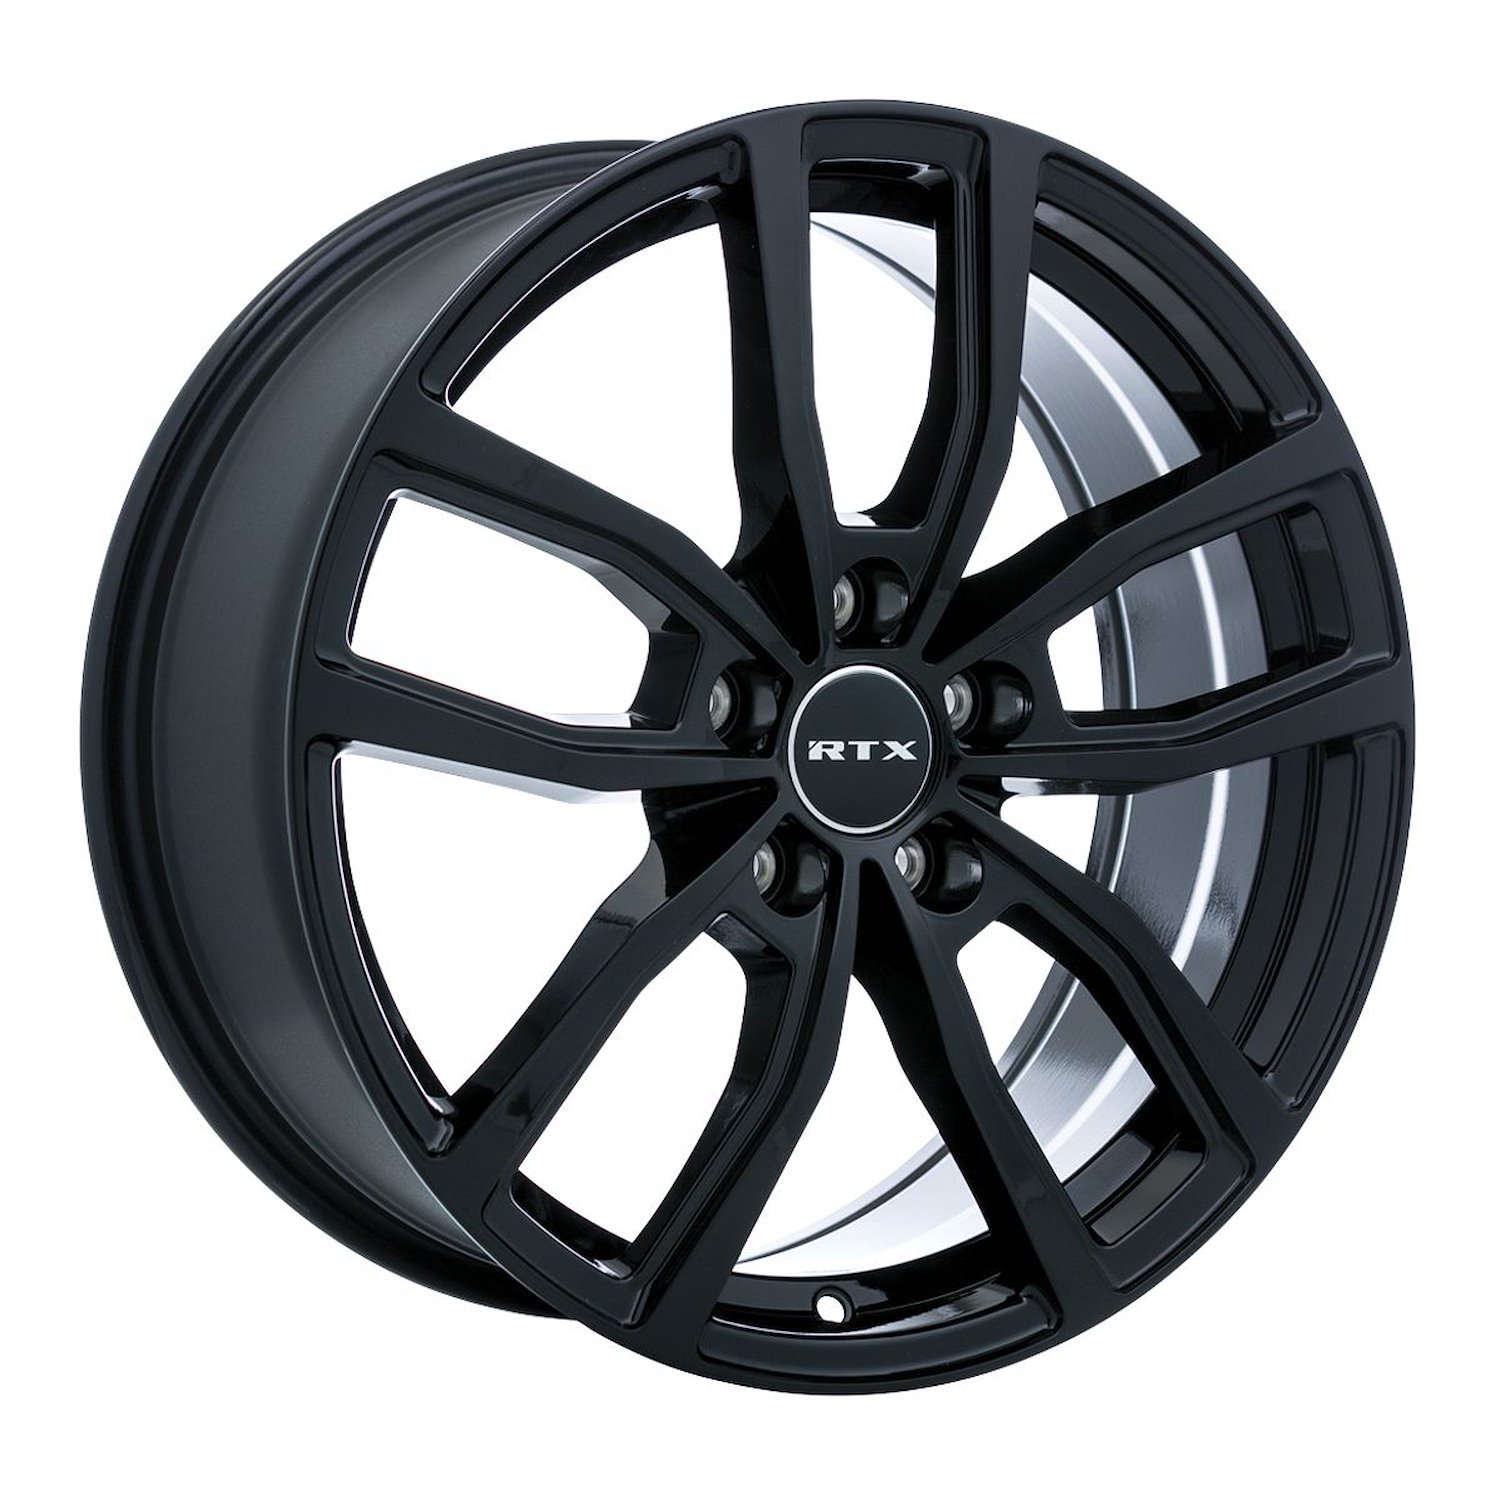 163708 RTX-Series Solstice Wheel [Size: 18" x 7.50"] Gloss Black Finish